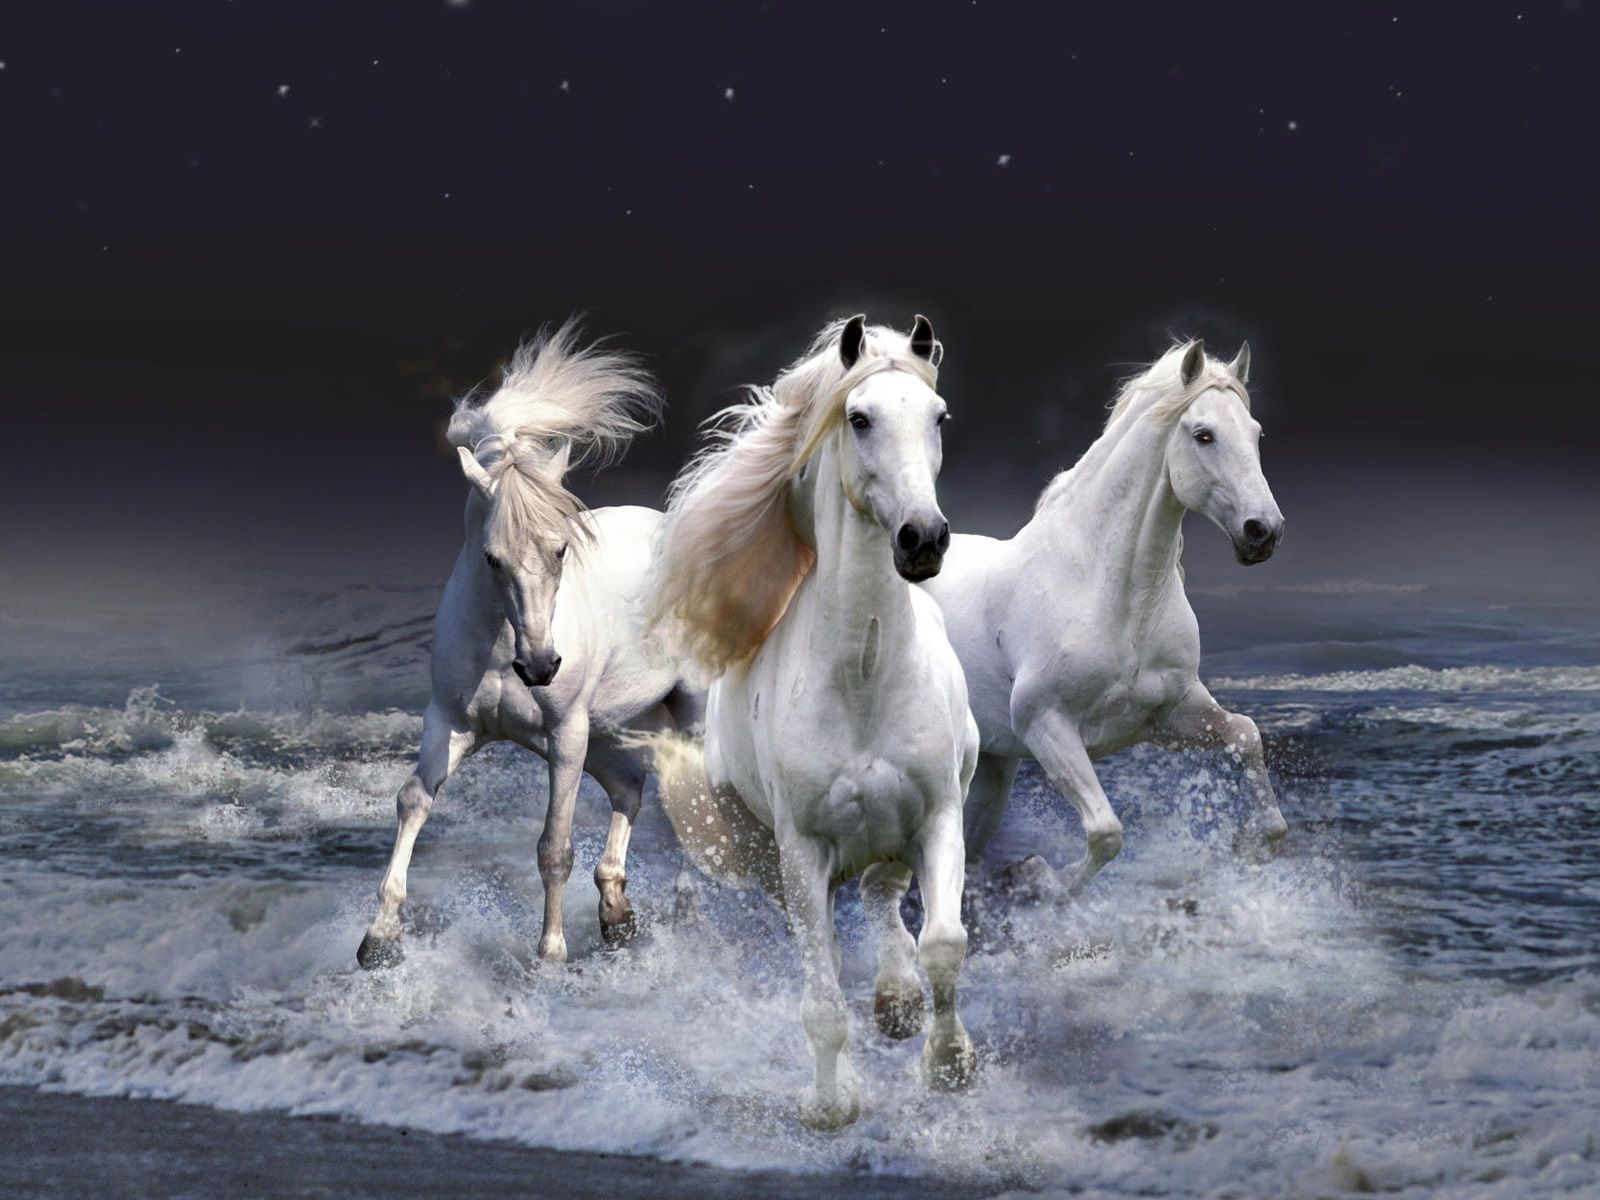 10 horse HD wallpapers | Desktop backgrounds, 5K, 4K, UHD